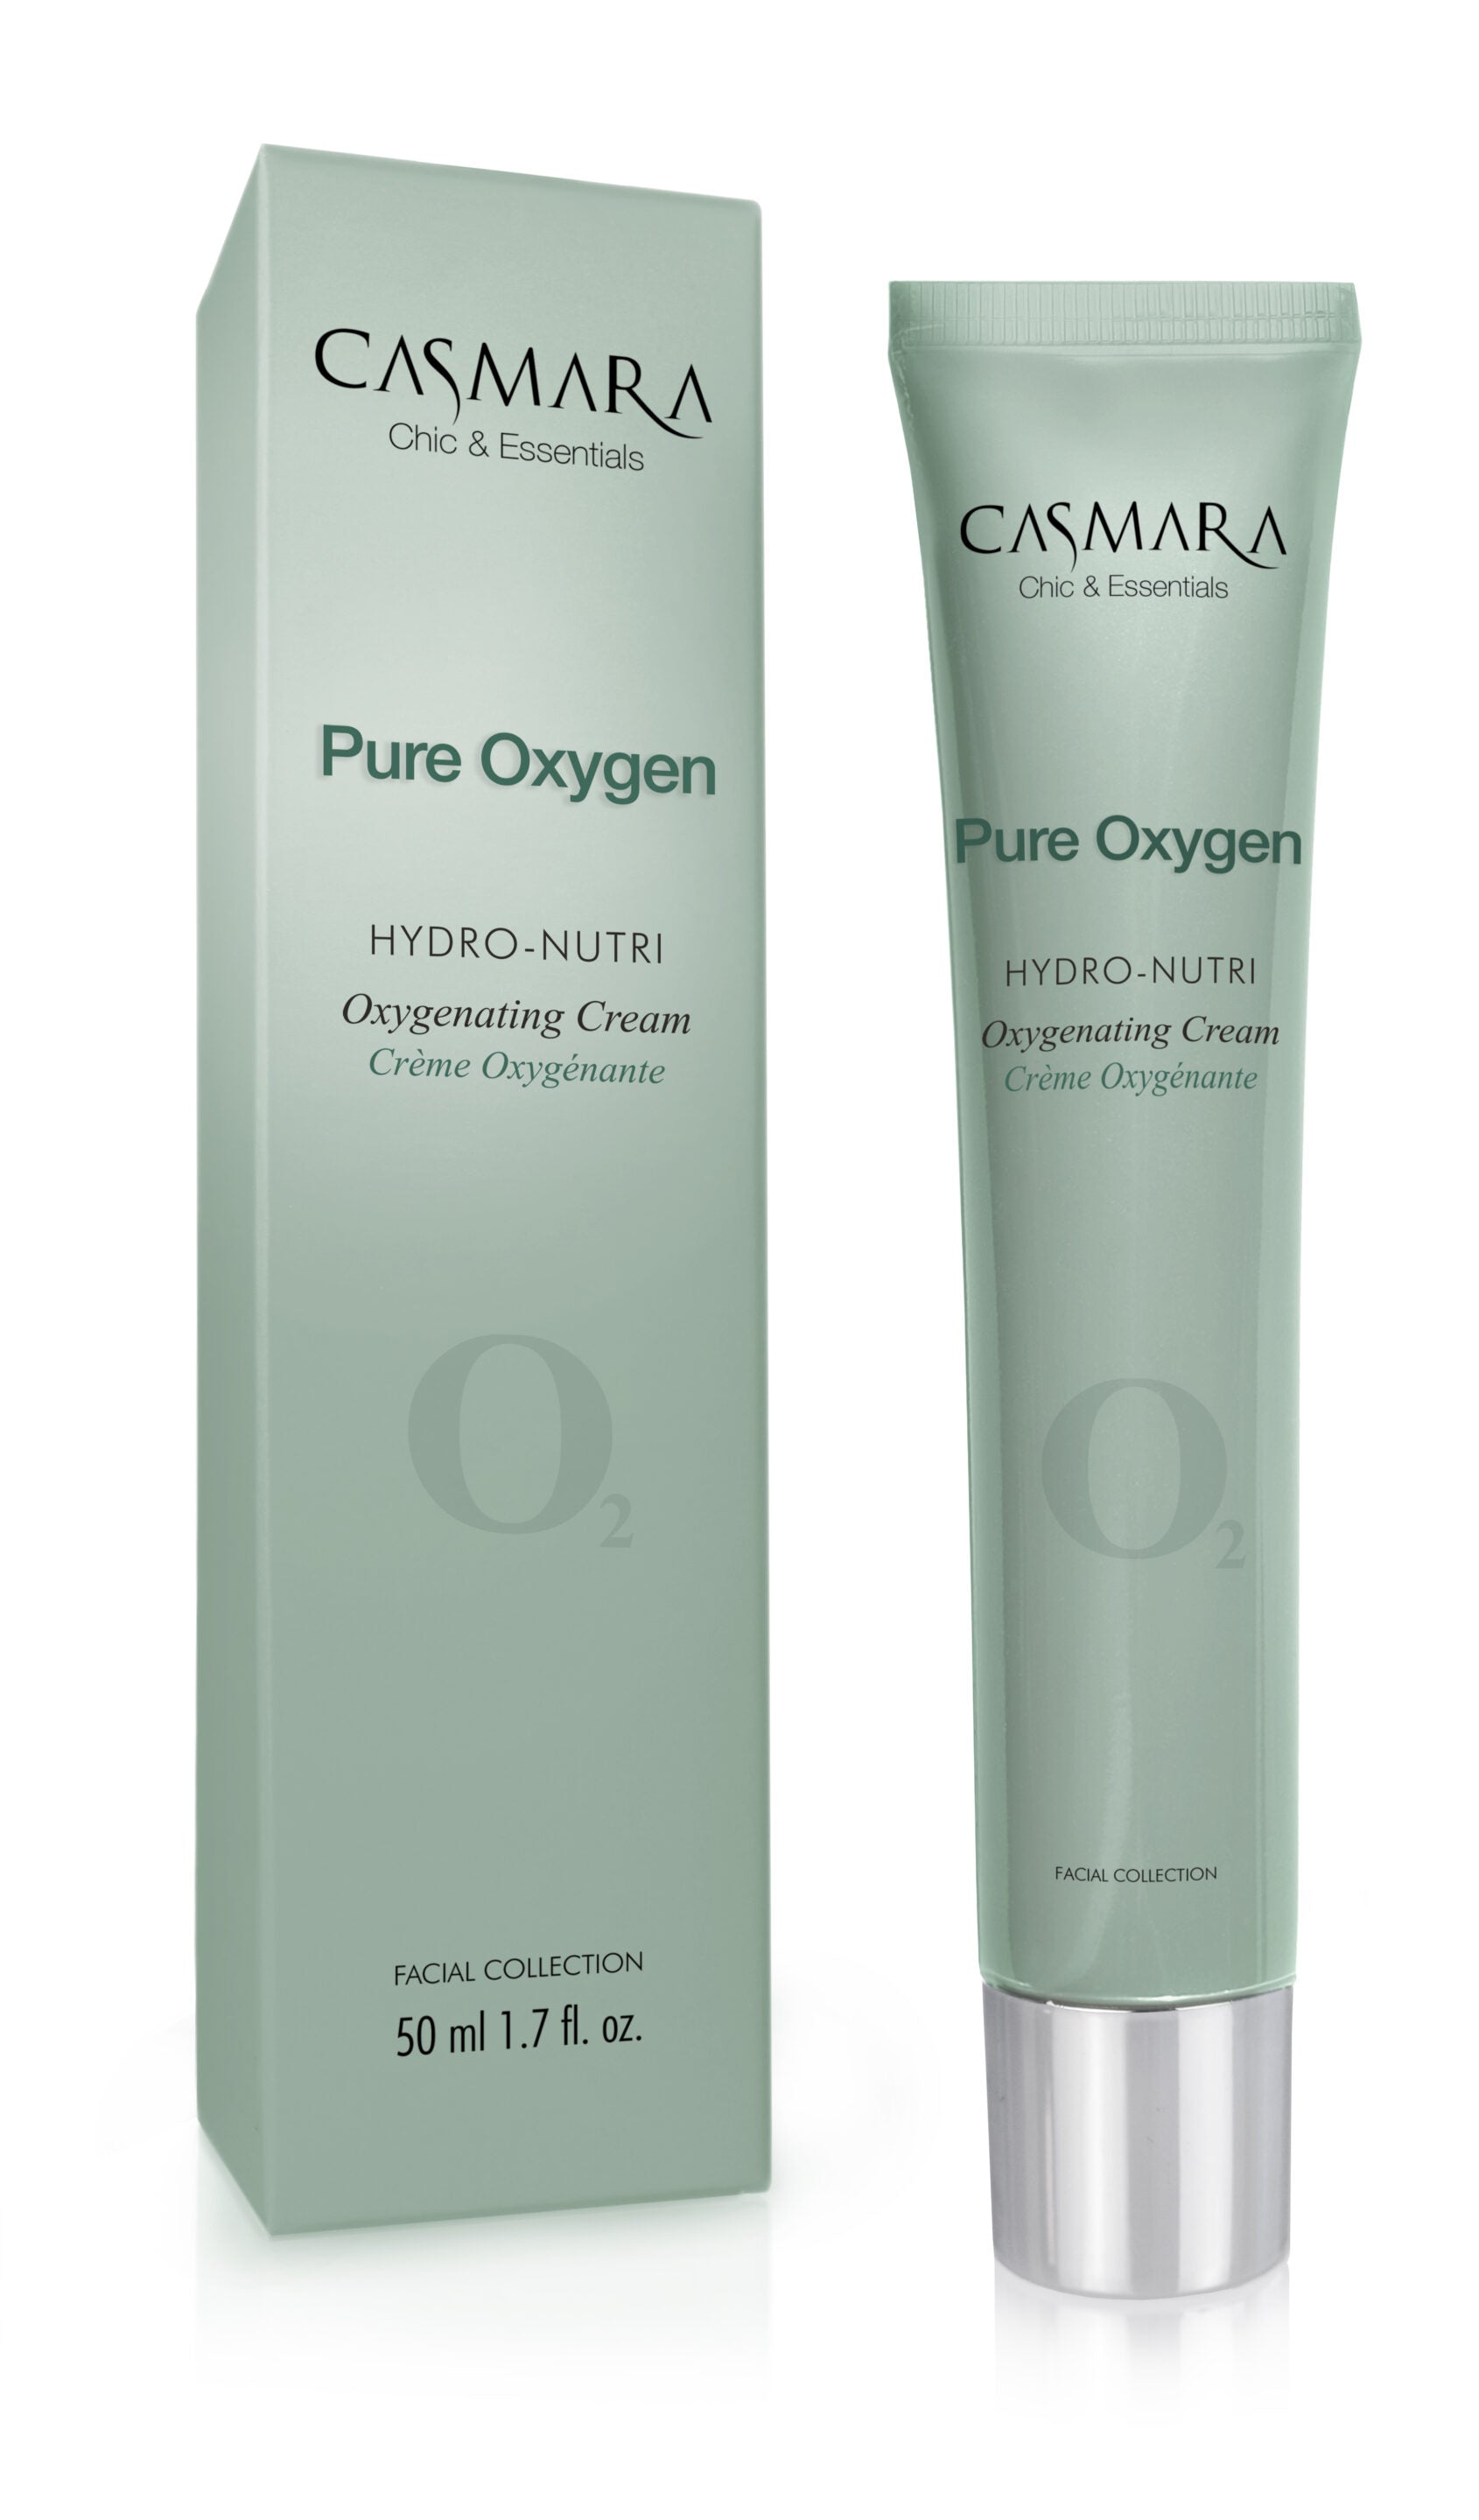 Pure Oxygen – Hydro-Nutri Oxygenating Cream